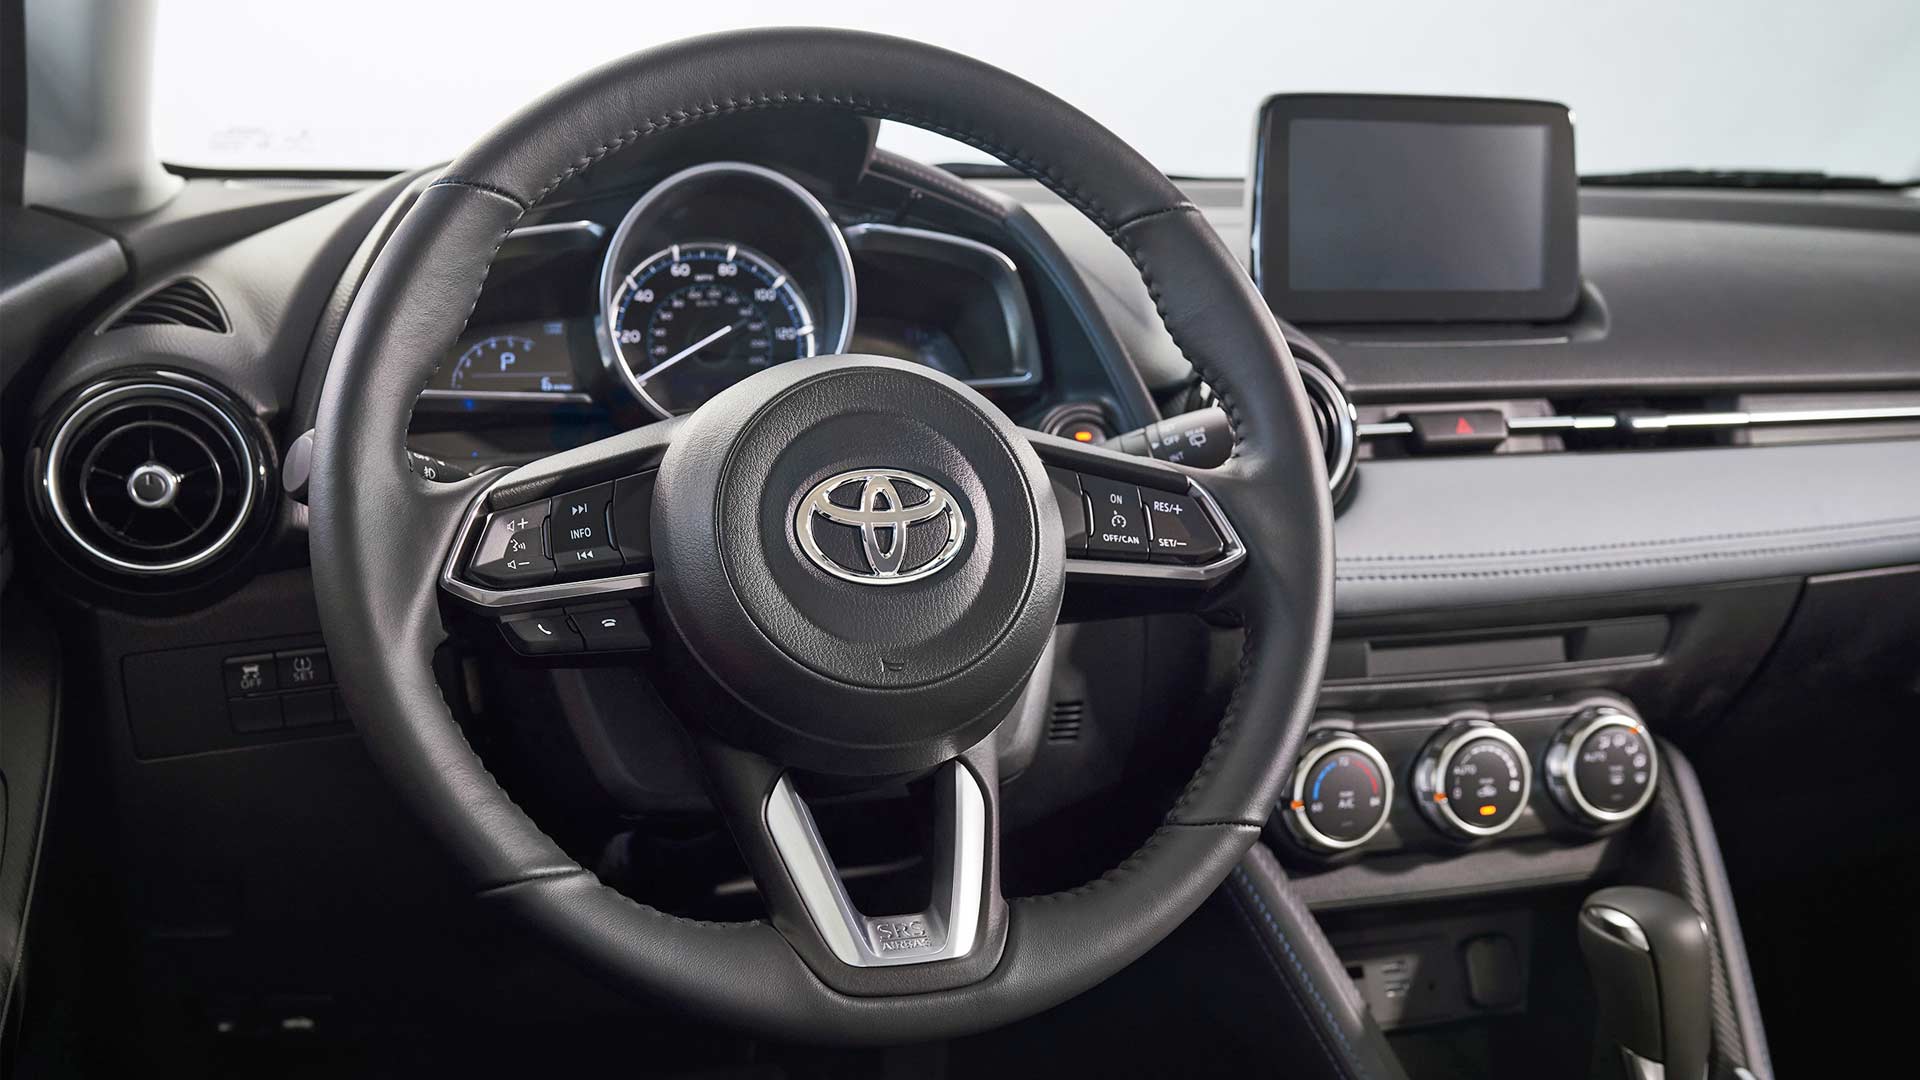 2020-Toyota-Yaris-Hatchback-Interior-Steering-Wheel-Instrument-Cluster